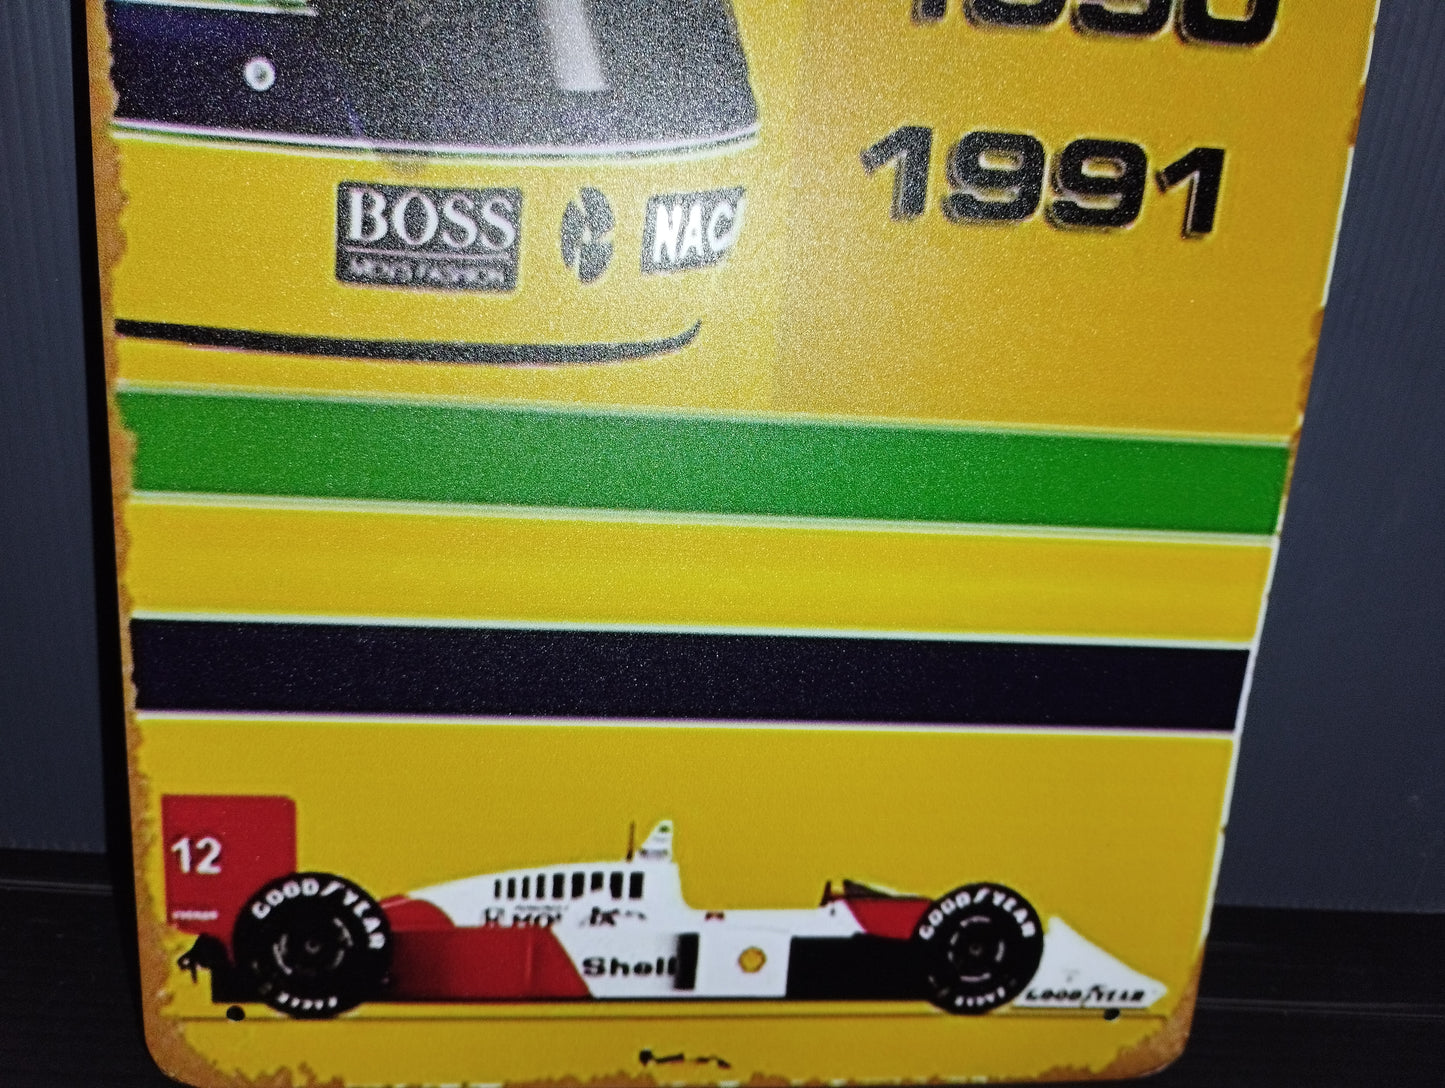 Targa Ayrton Senna World Champion

In metallo